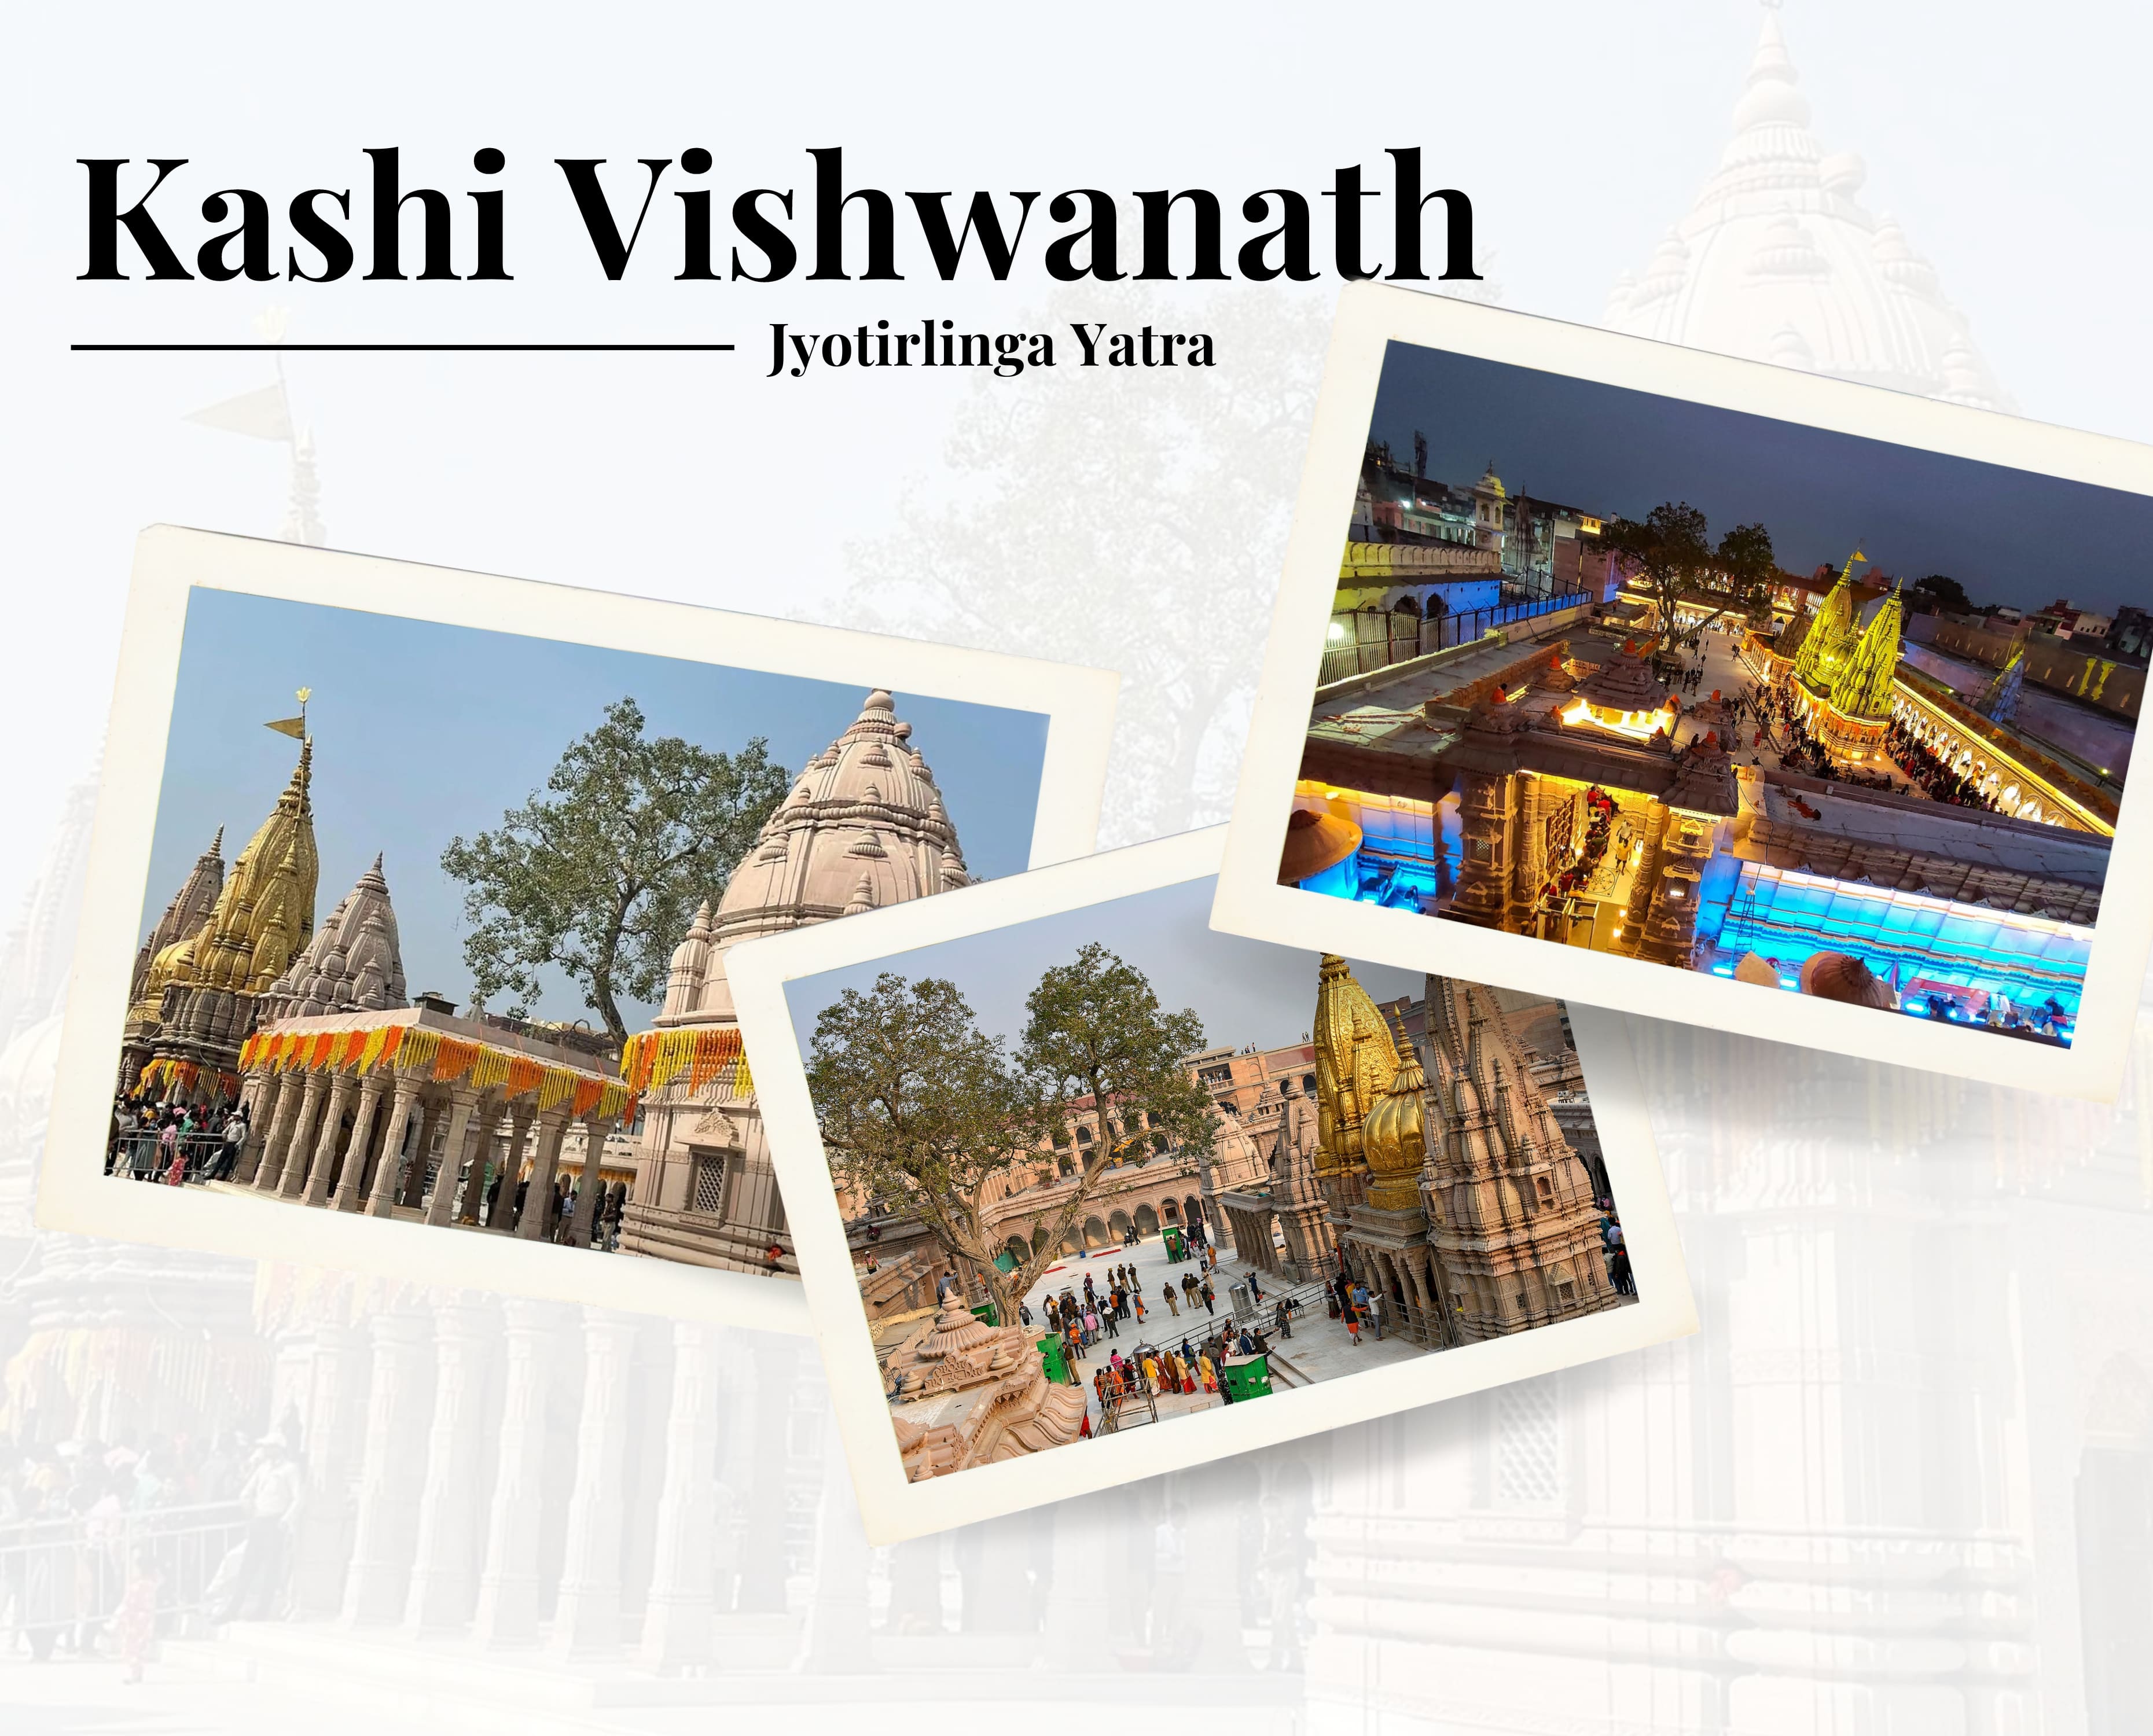 Tempo Traveller For Kashi Vishwanath Jyotirlinga